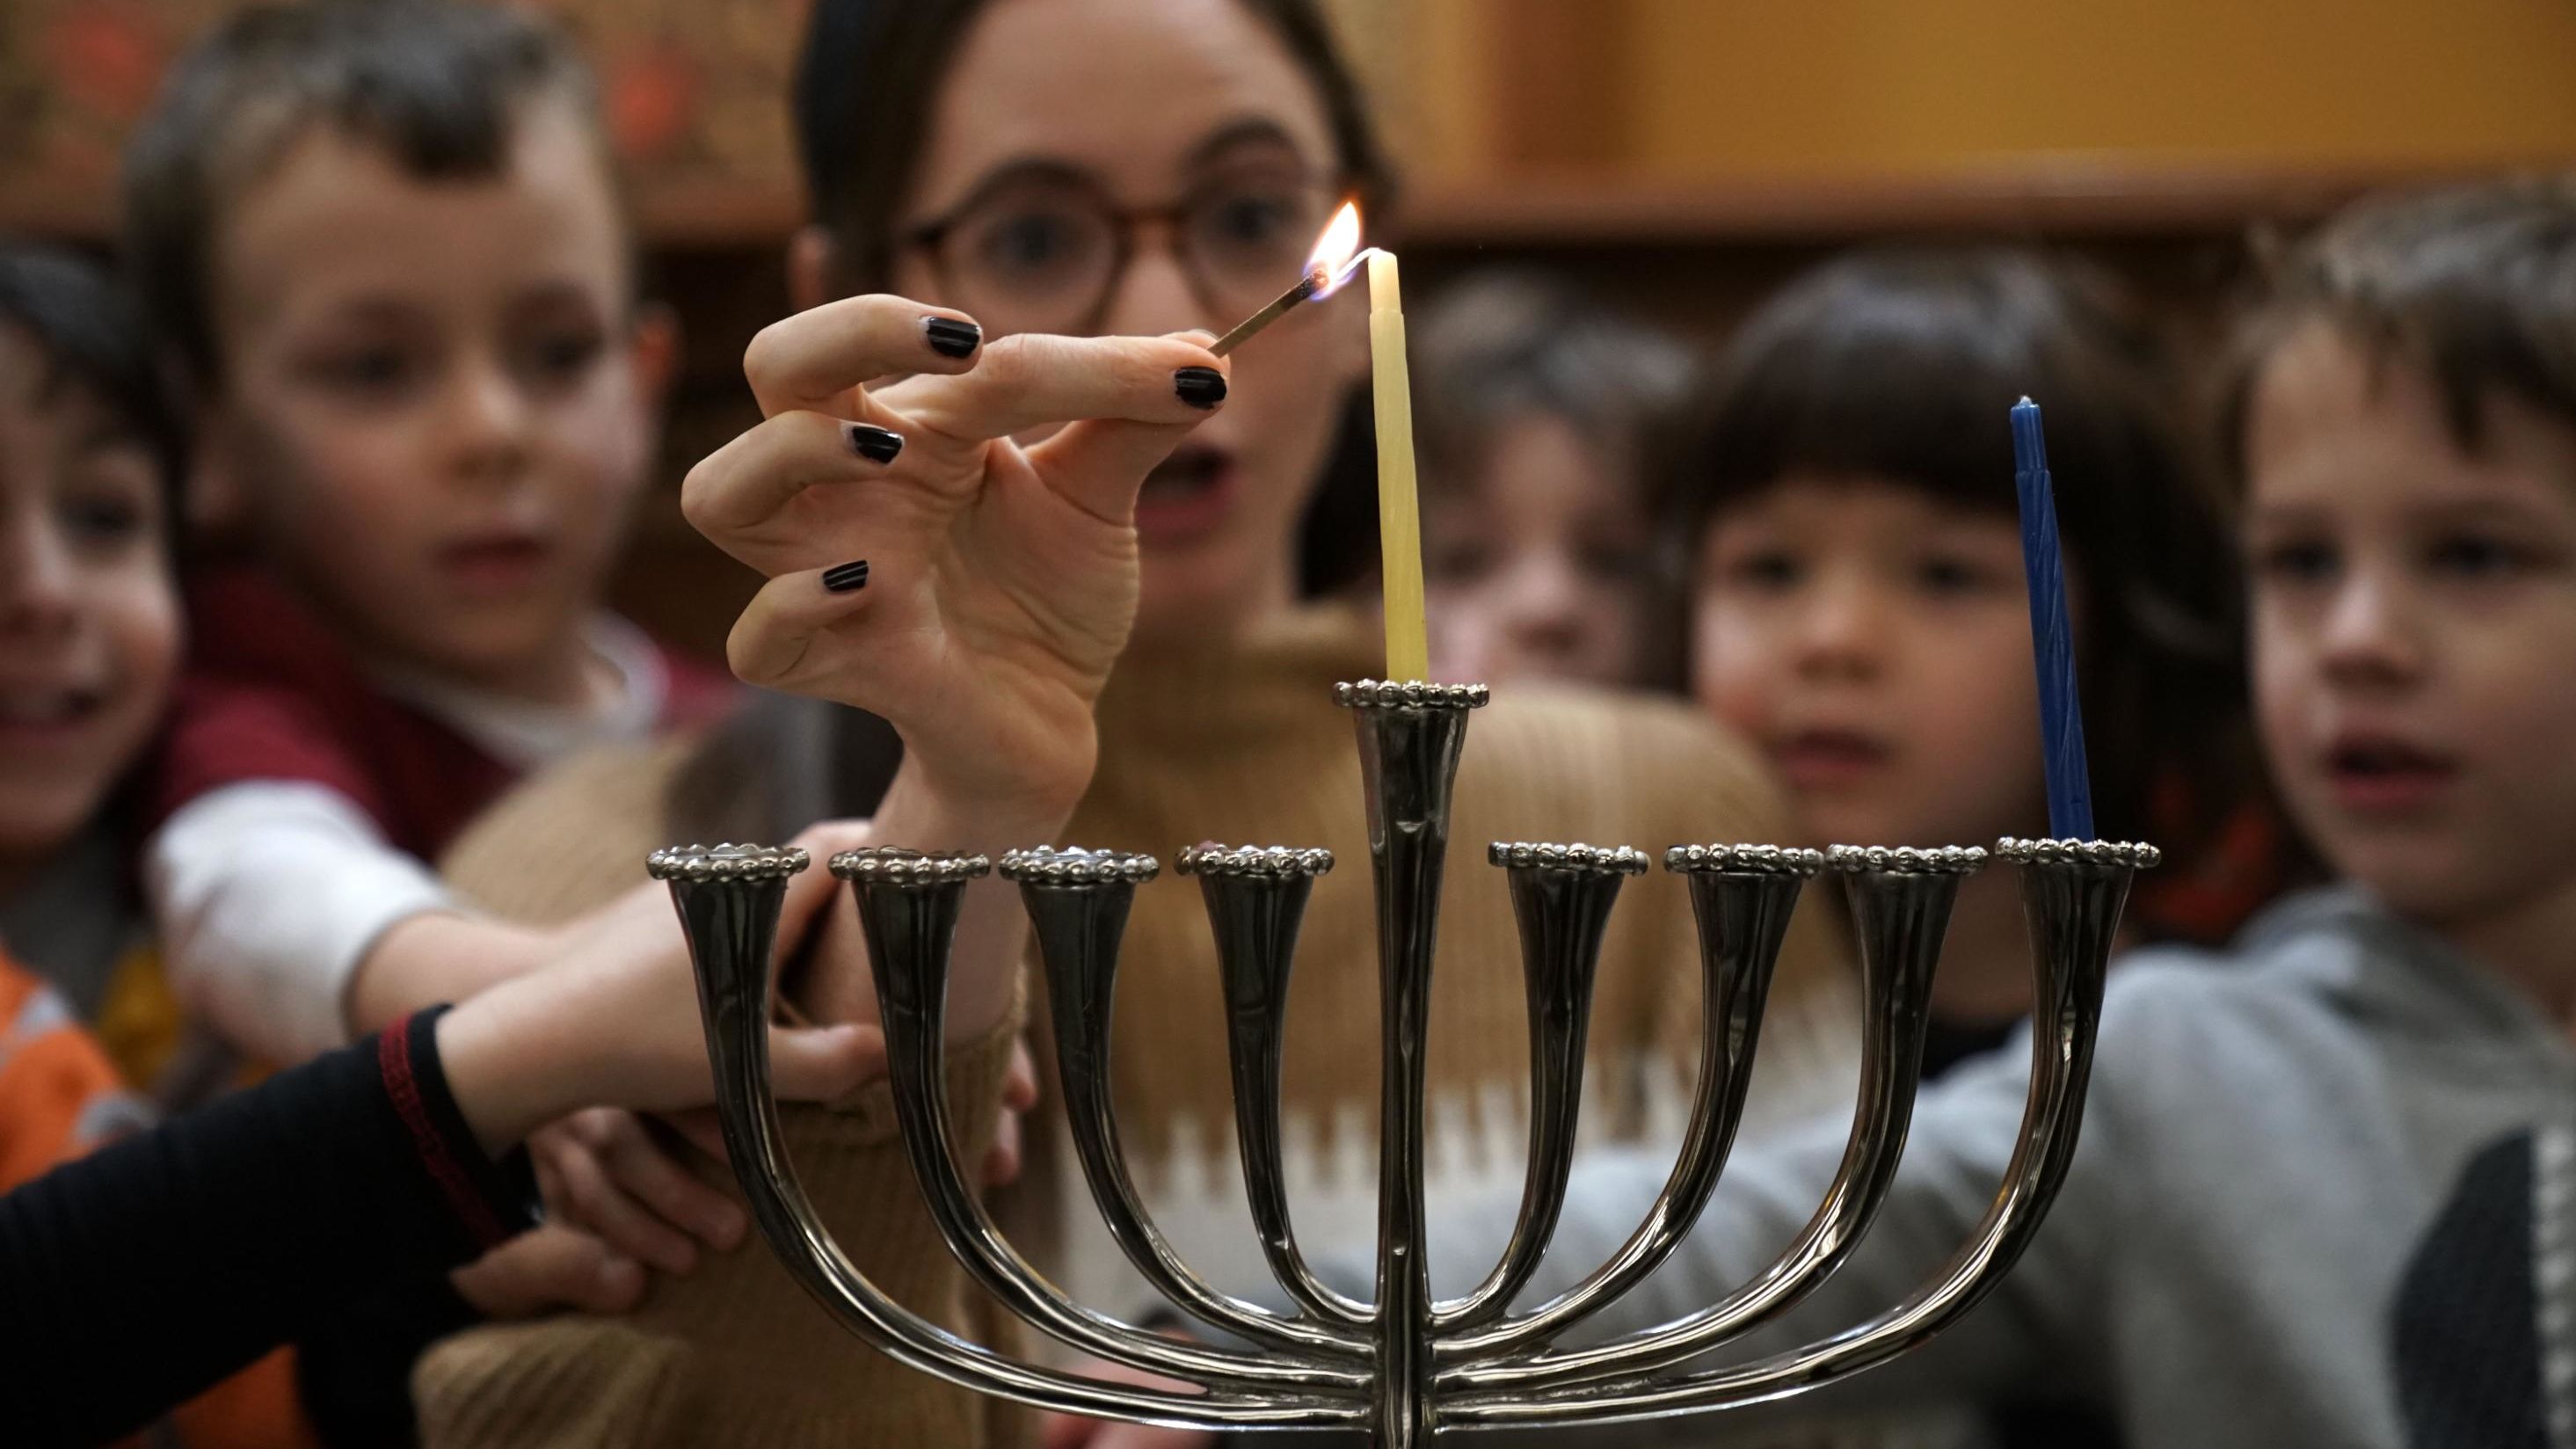 A small group of pre-schoolers from Gan HaYeled learn how to light a Hanukkah menorah from Rabbi Sarah Krinsky at Adas Israel Congregation November 30, 2018 in Washington, DC. This year, Hanukkah will begin at sundown on December 22 and last until sundown on December 30.